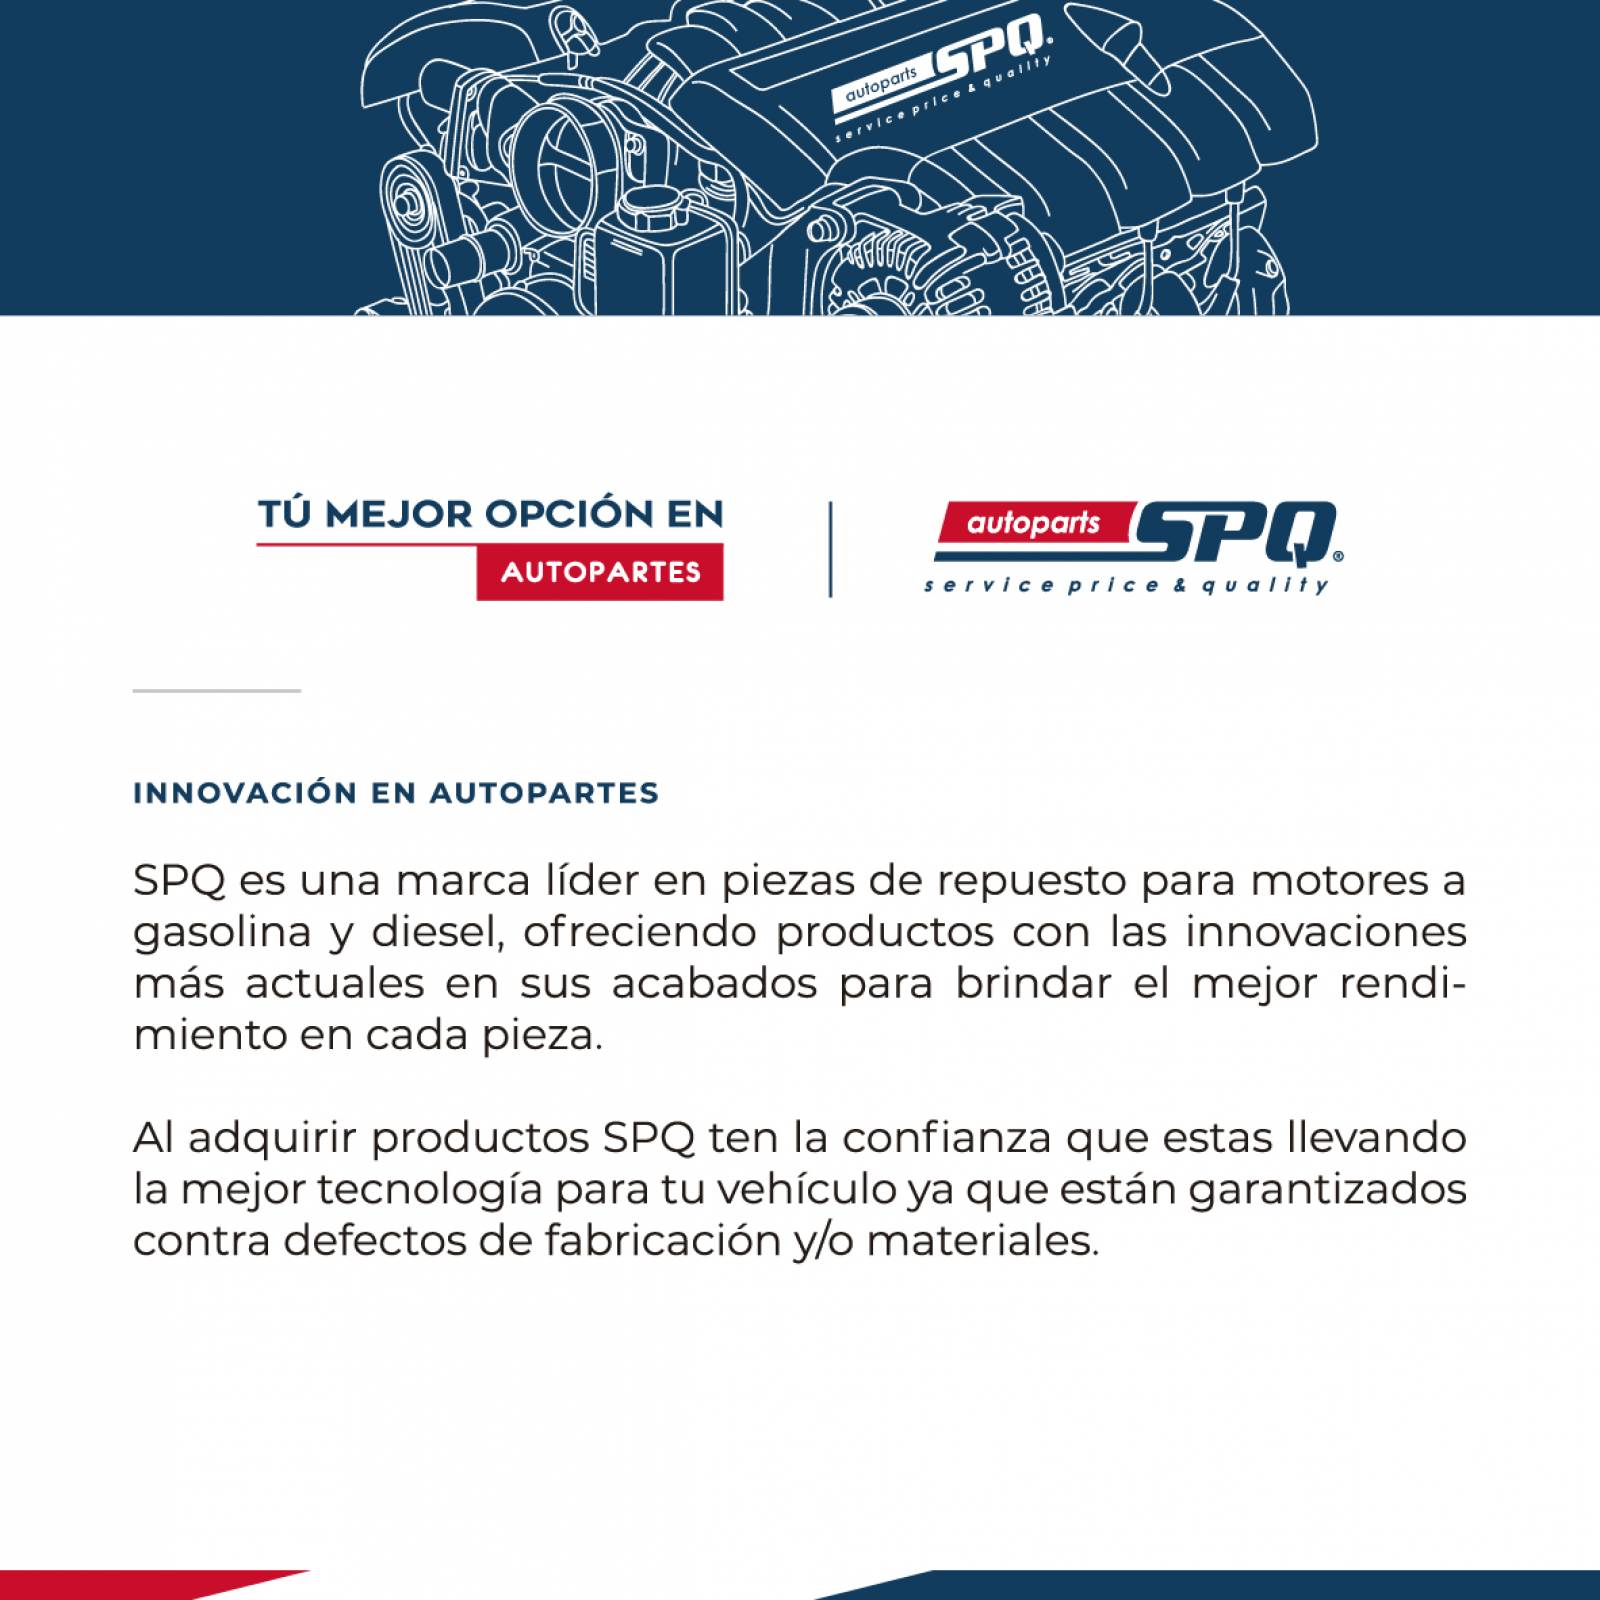 Kit De Tiempo, SPQ; Para Infiniti I30 1996-2001 V6; 3